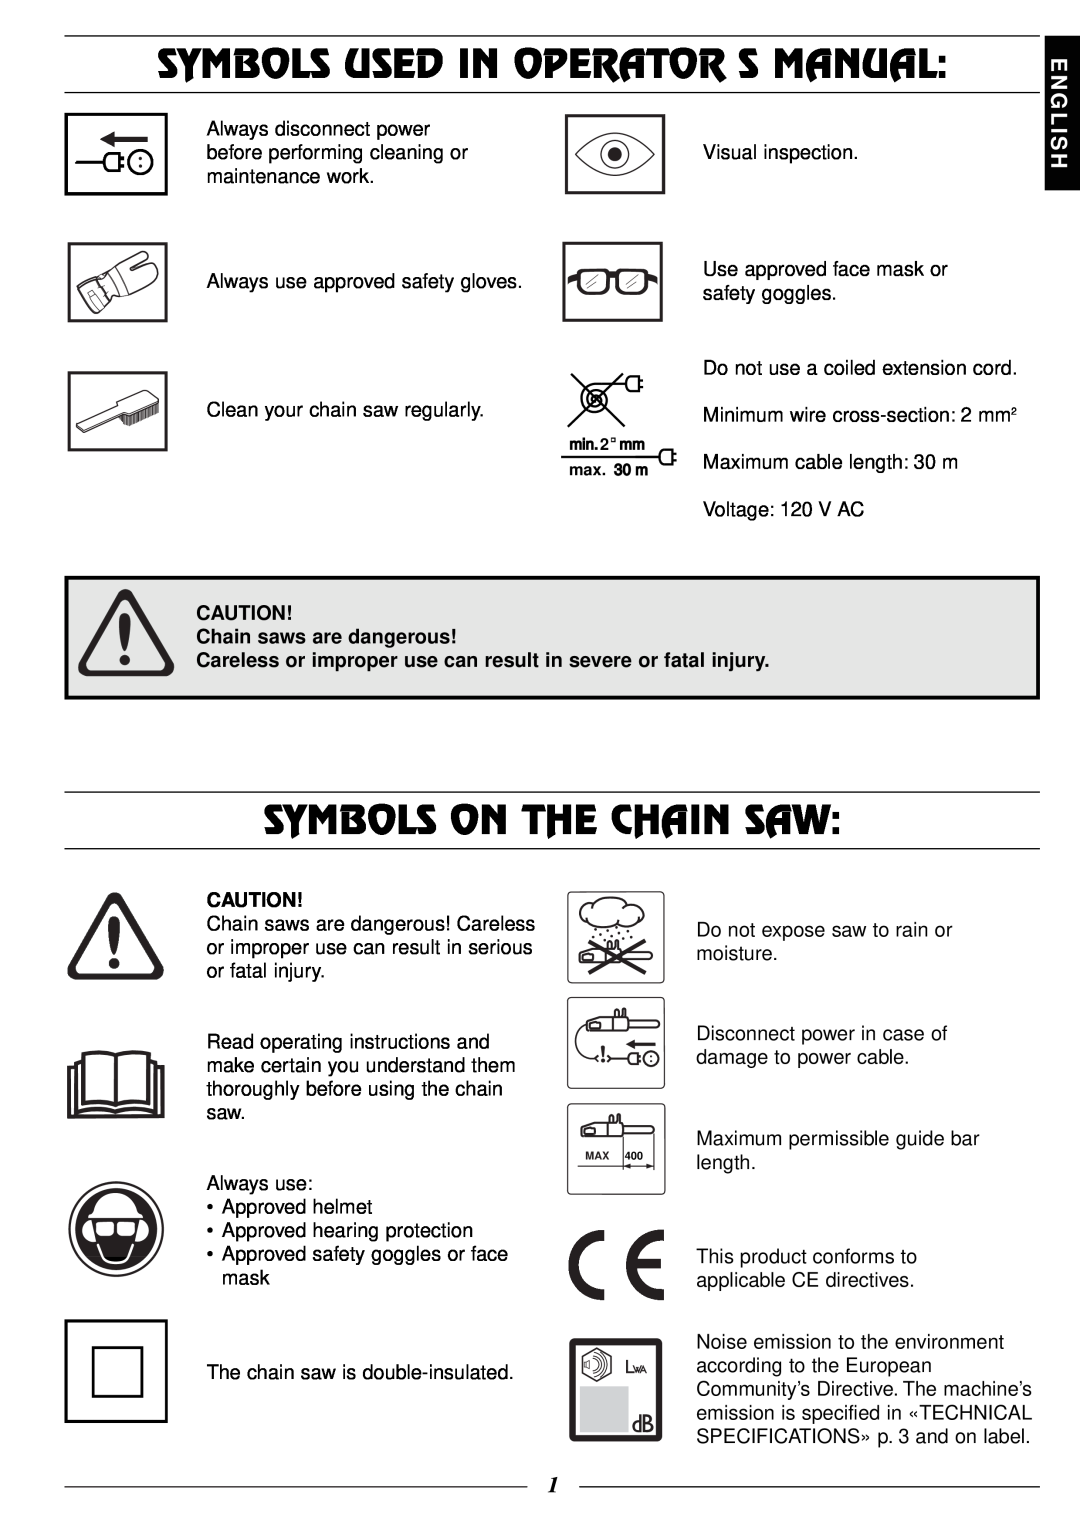 Husqvarna 316 Symbols Used In Operator S Manual, Symbols On The Chain Saw, E N G L I S H, Chain saws are dangerous, length 